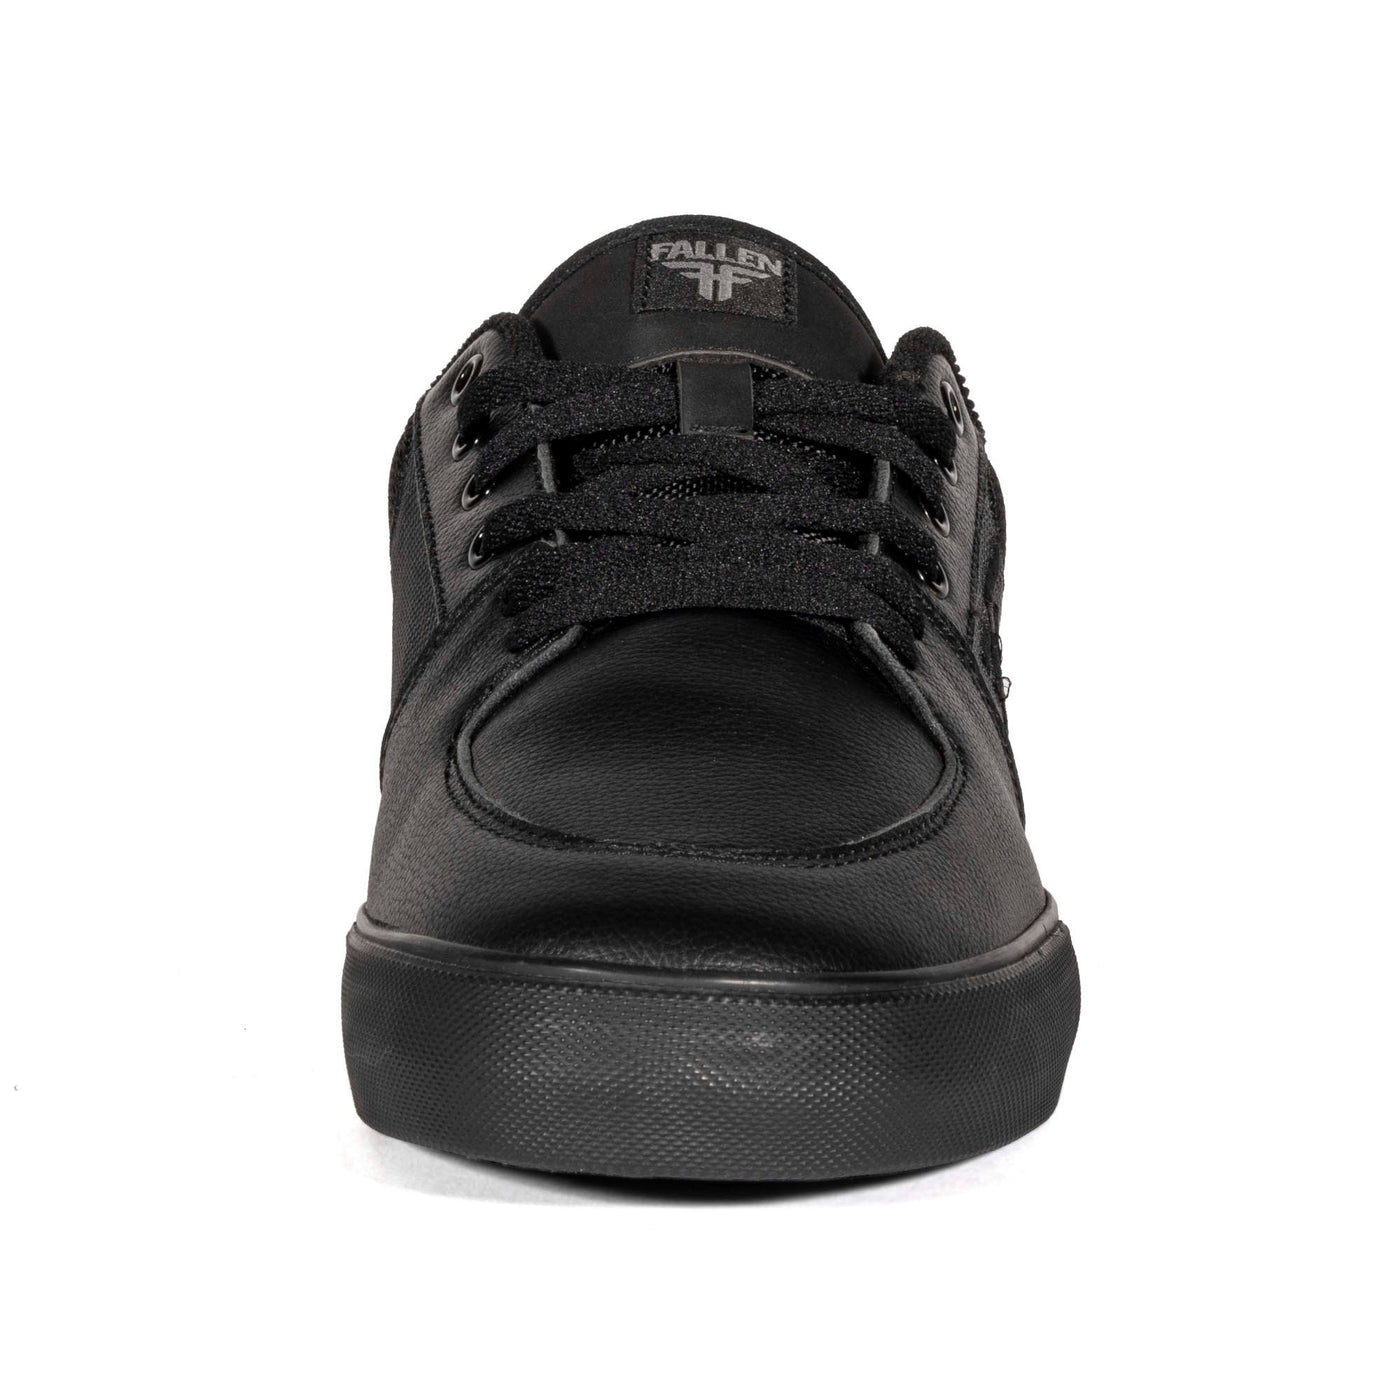 Fallen Footwear Patriot Vulc skate shoes in Black / Black front image